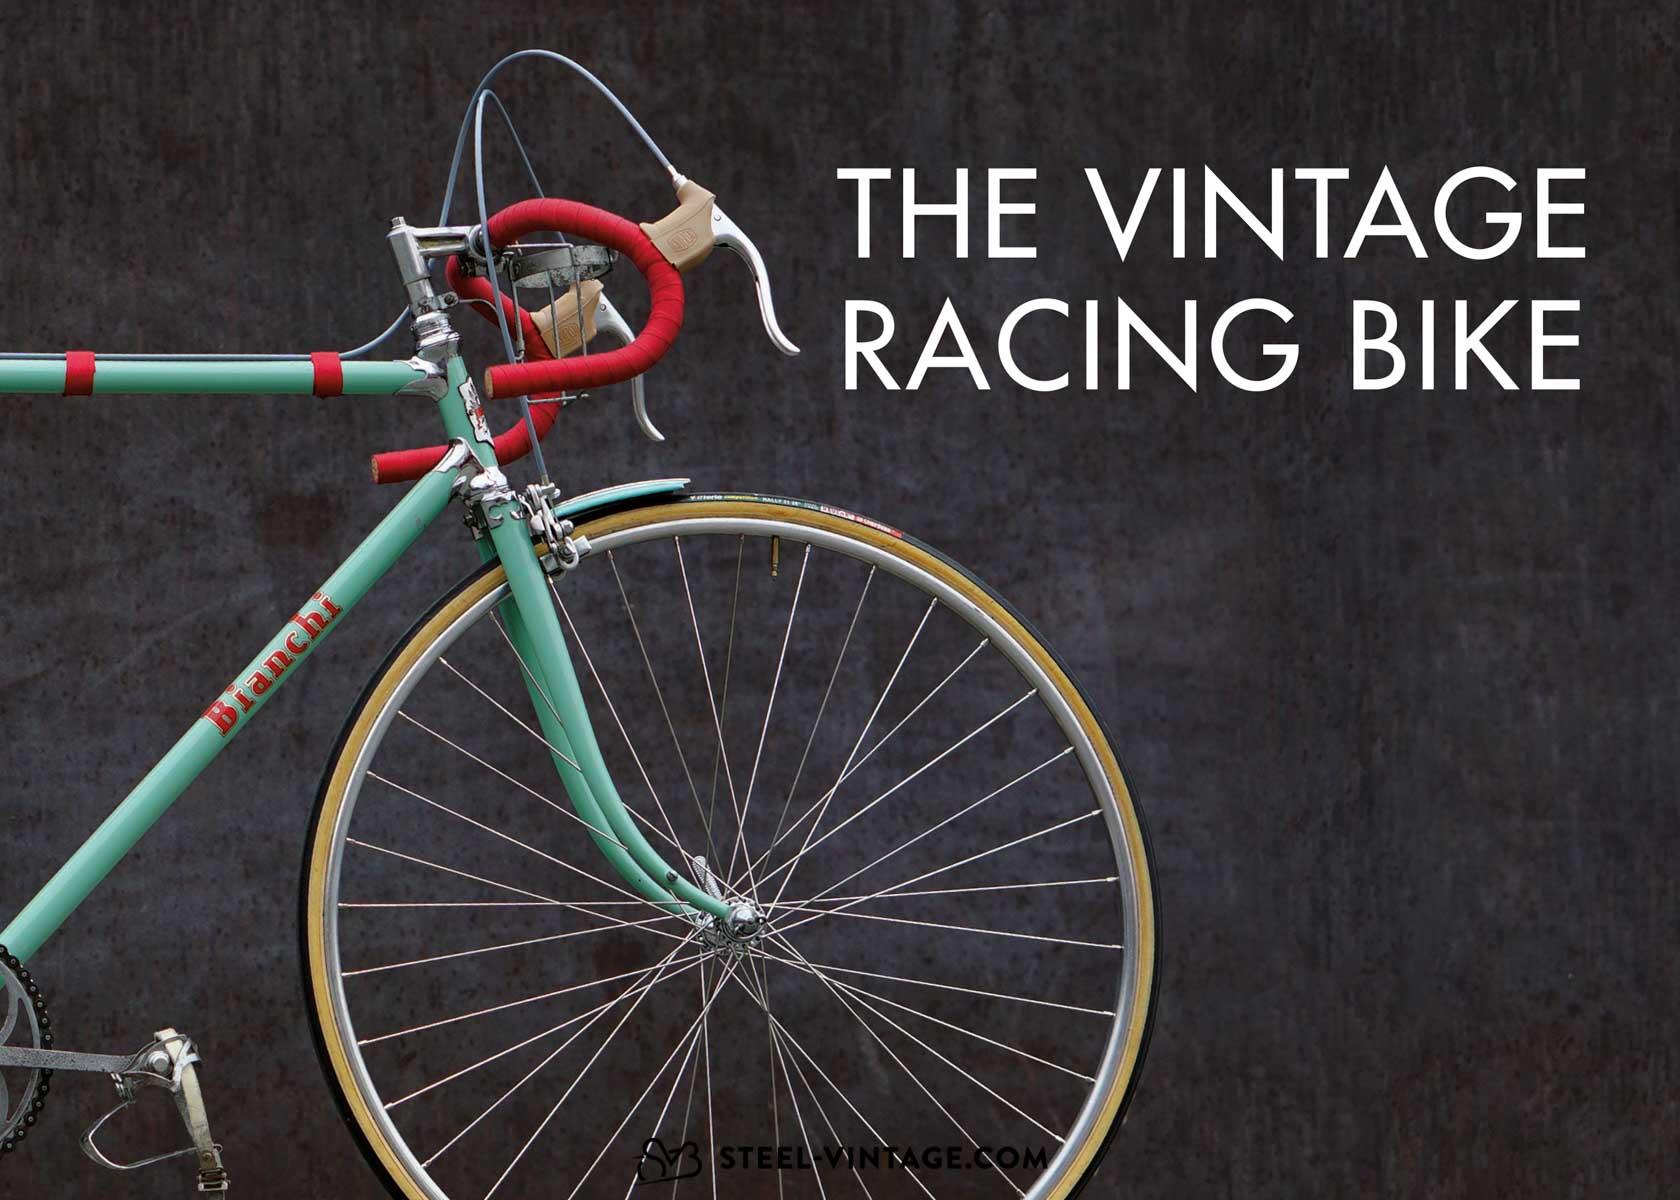 The Vintage Racing Bicycle book